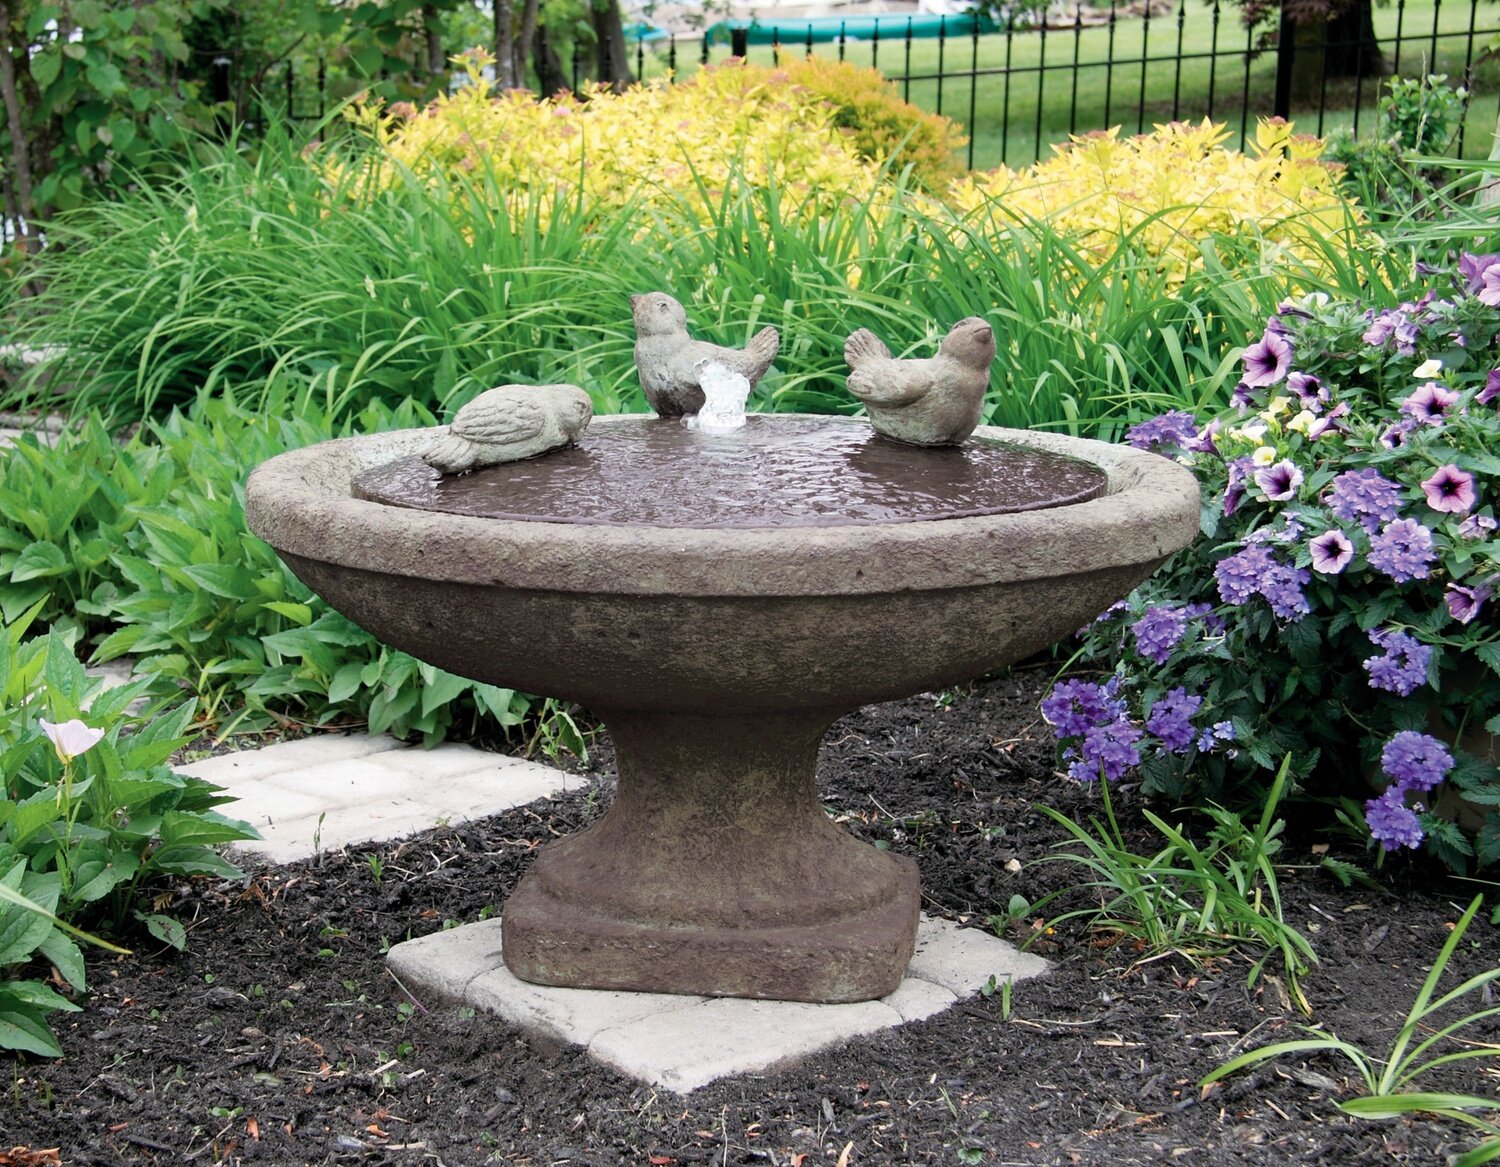 16" Singing Birds Oval Fountain